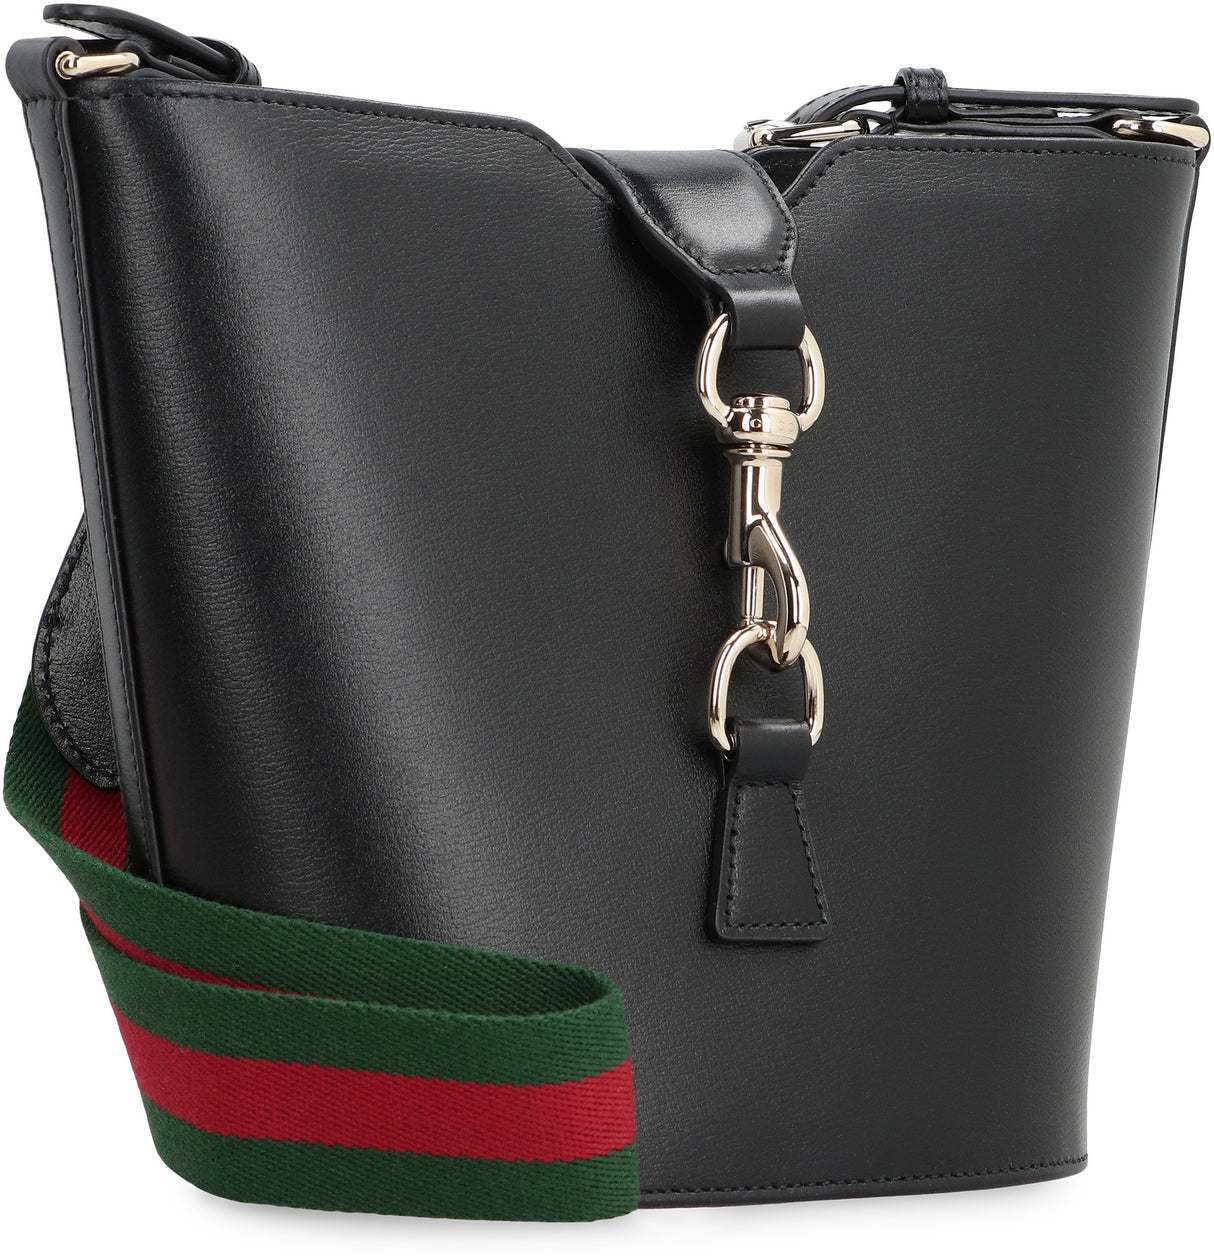 GUCCI Chic Mini Bucket Handbag in Black Leather with Silver-Tone Hardware